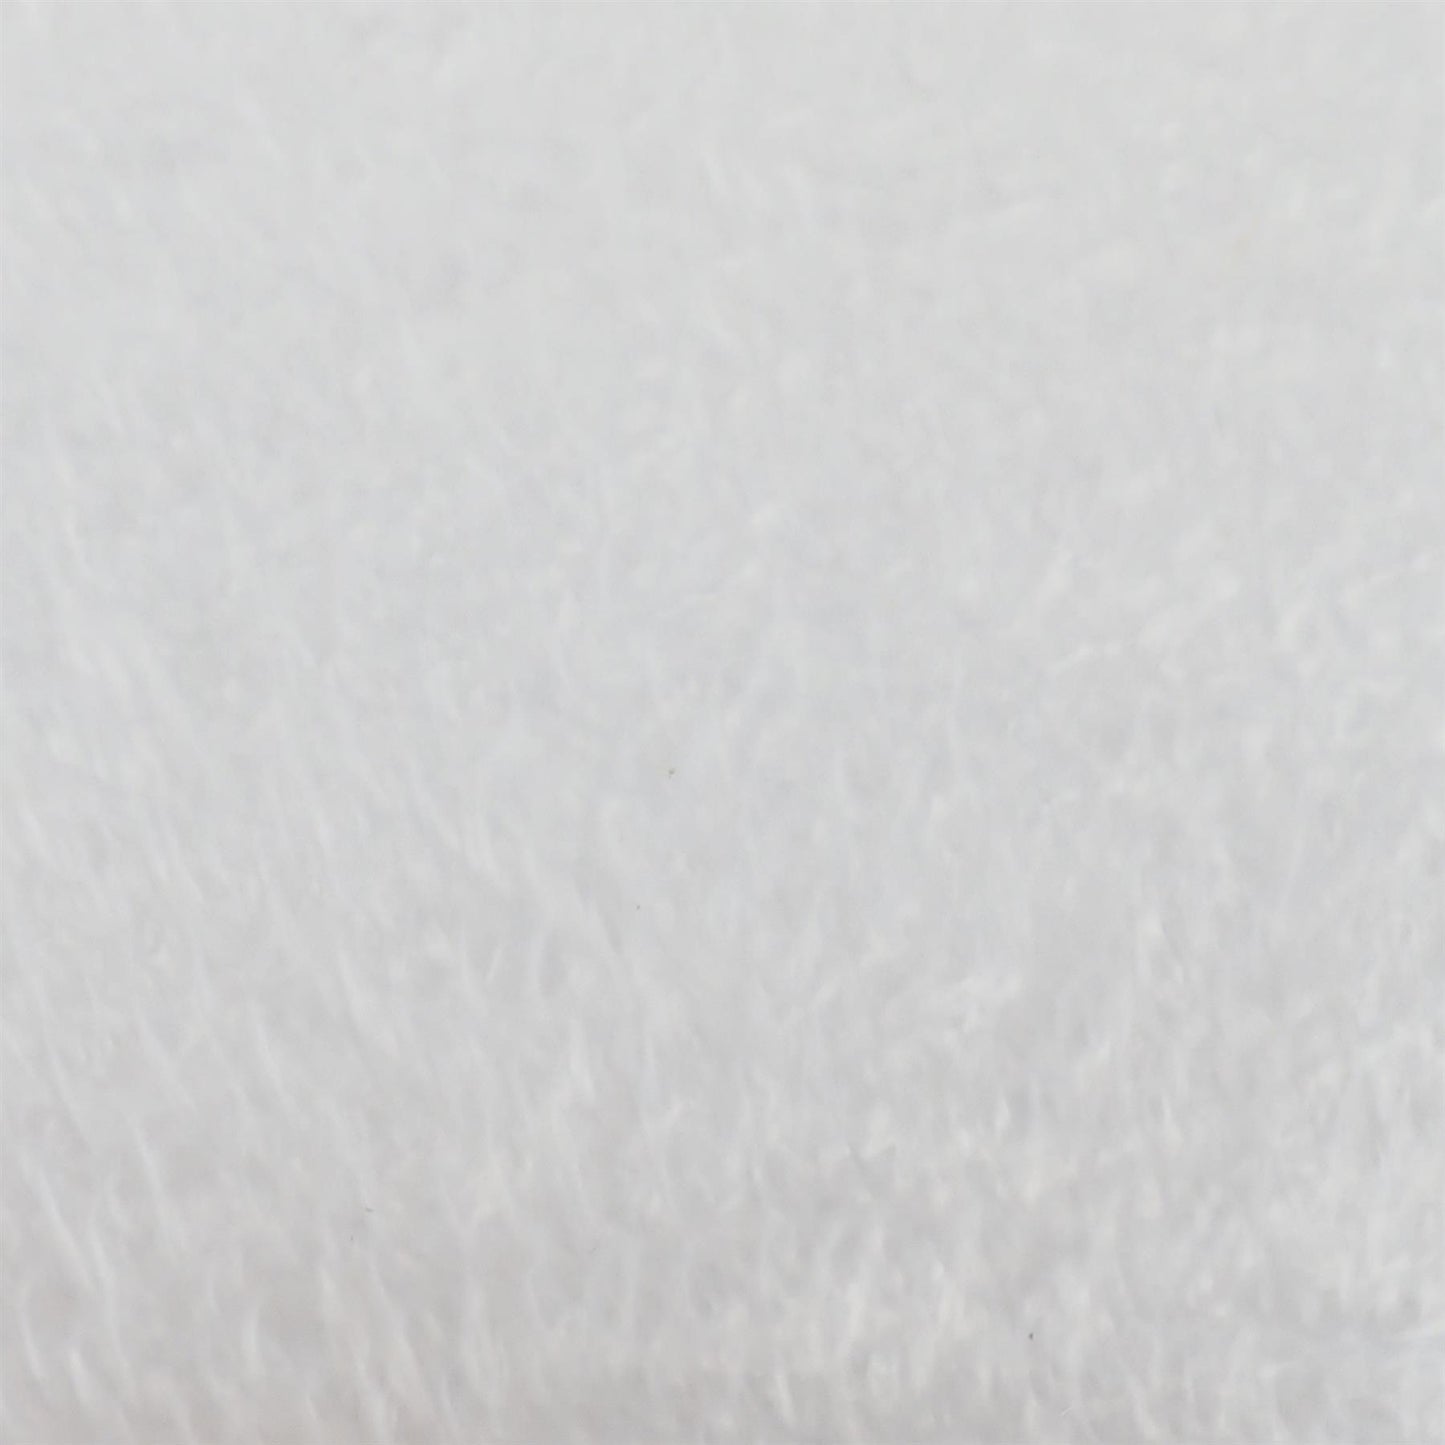 Incudo White Lava Pearl Acrylic Sheet - 300x250x3mm